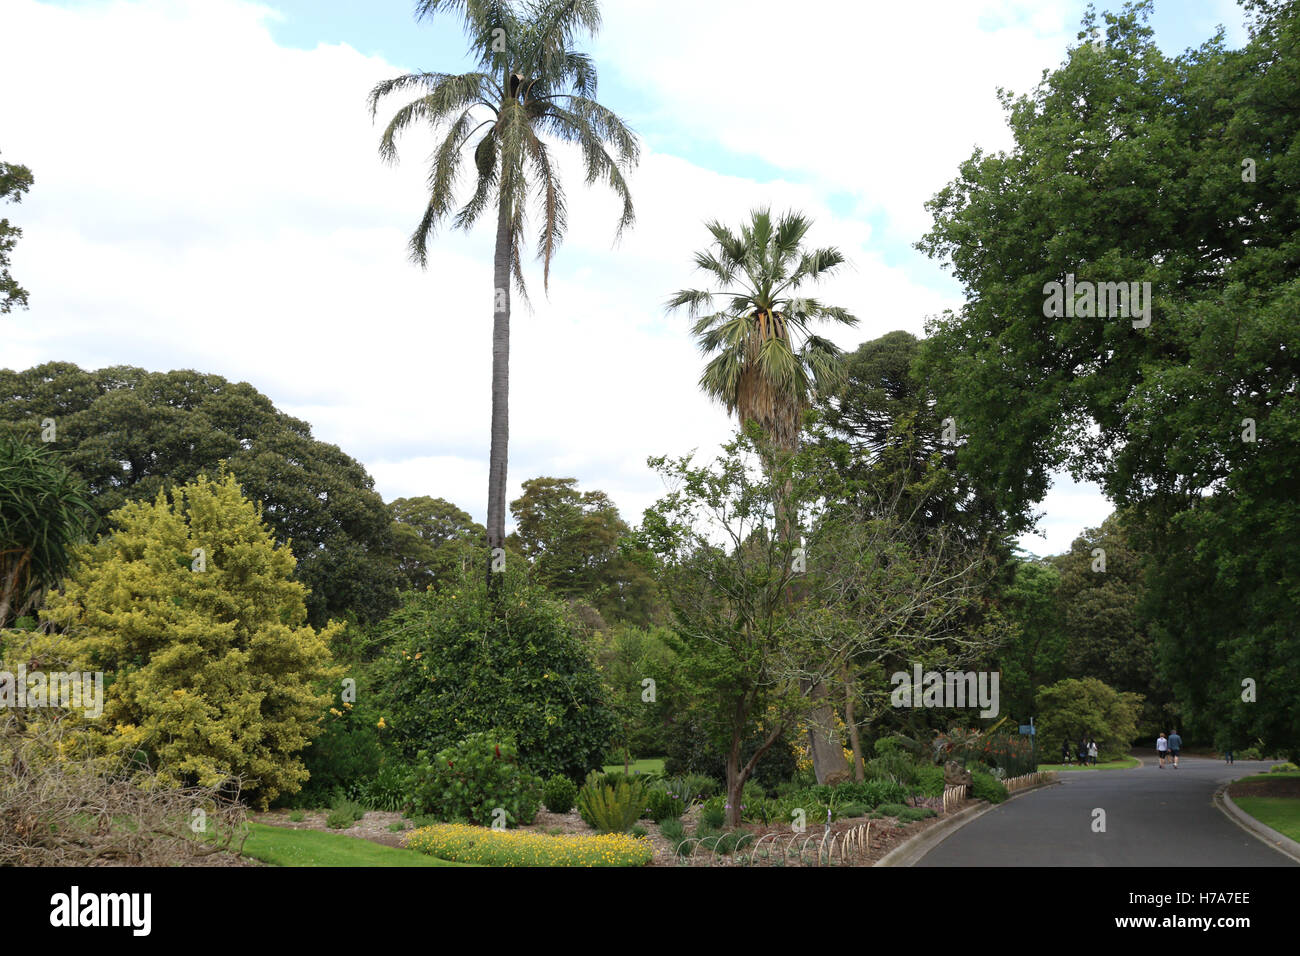 The Royal Botanic Gardens in Melbourne. Stock Photo